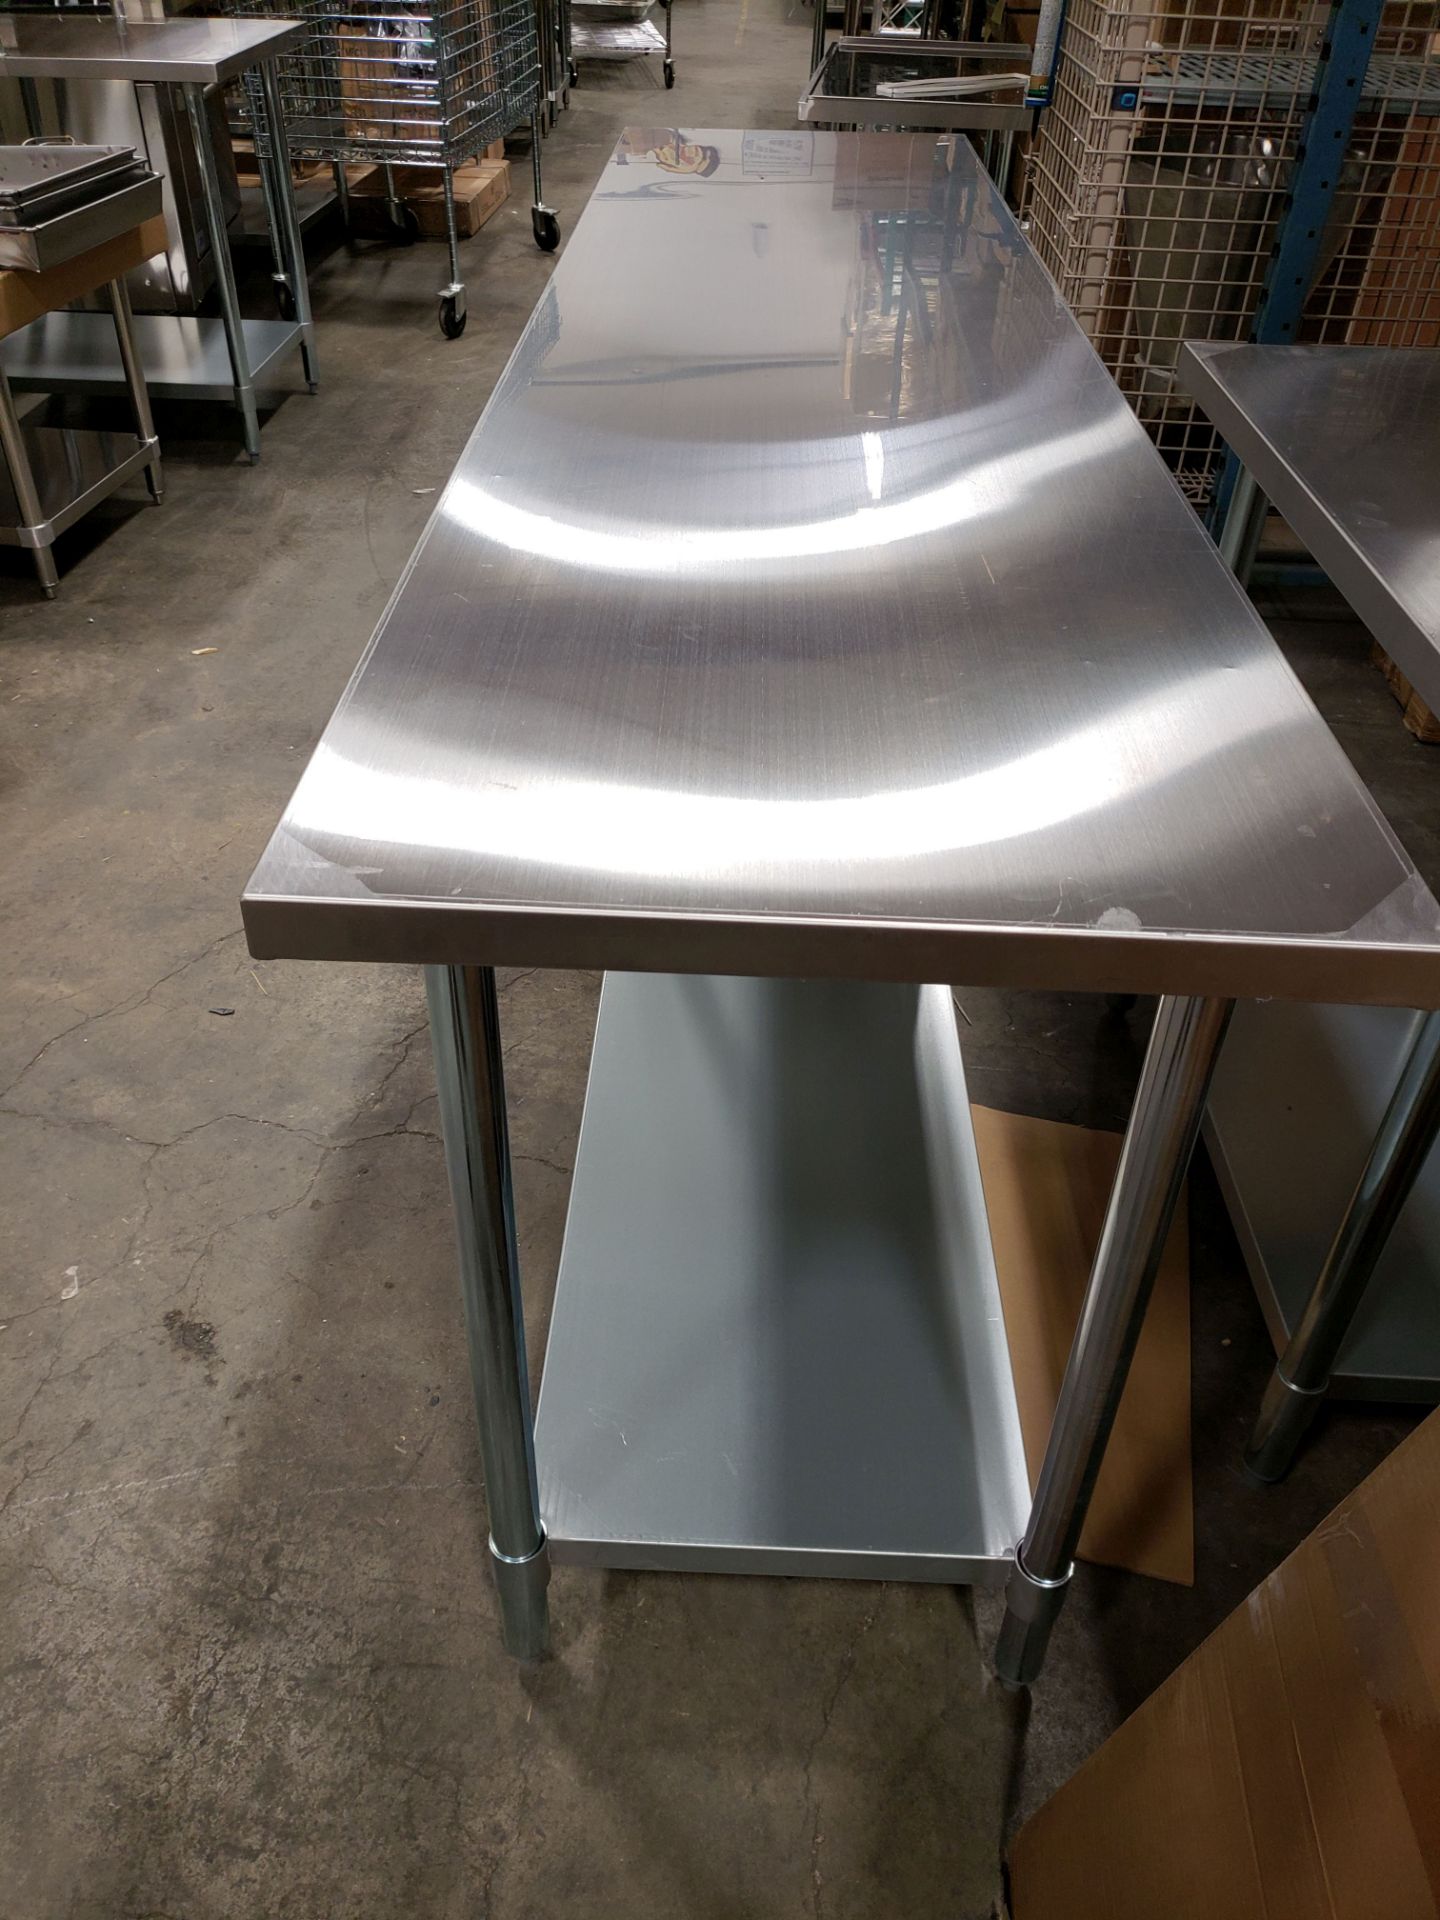 24" x 96" Stainless Steel Work Table, Galvanzed Undershelf - Image 2 of 3